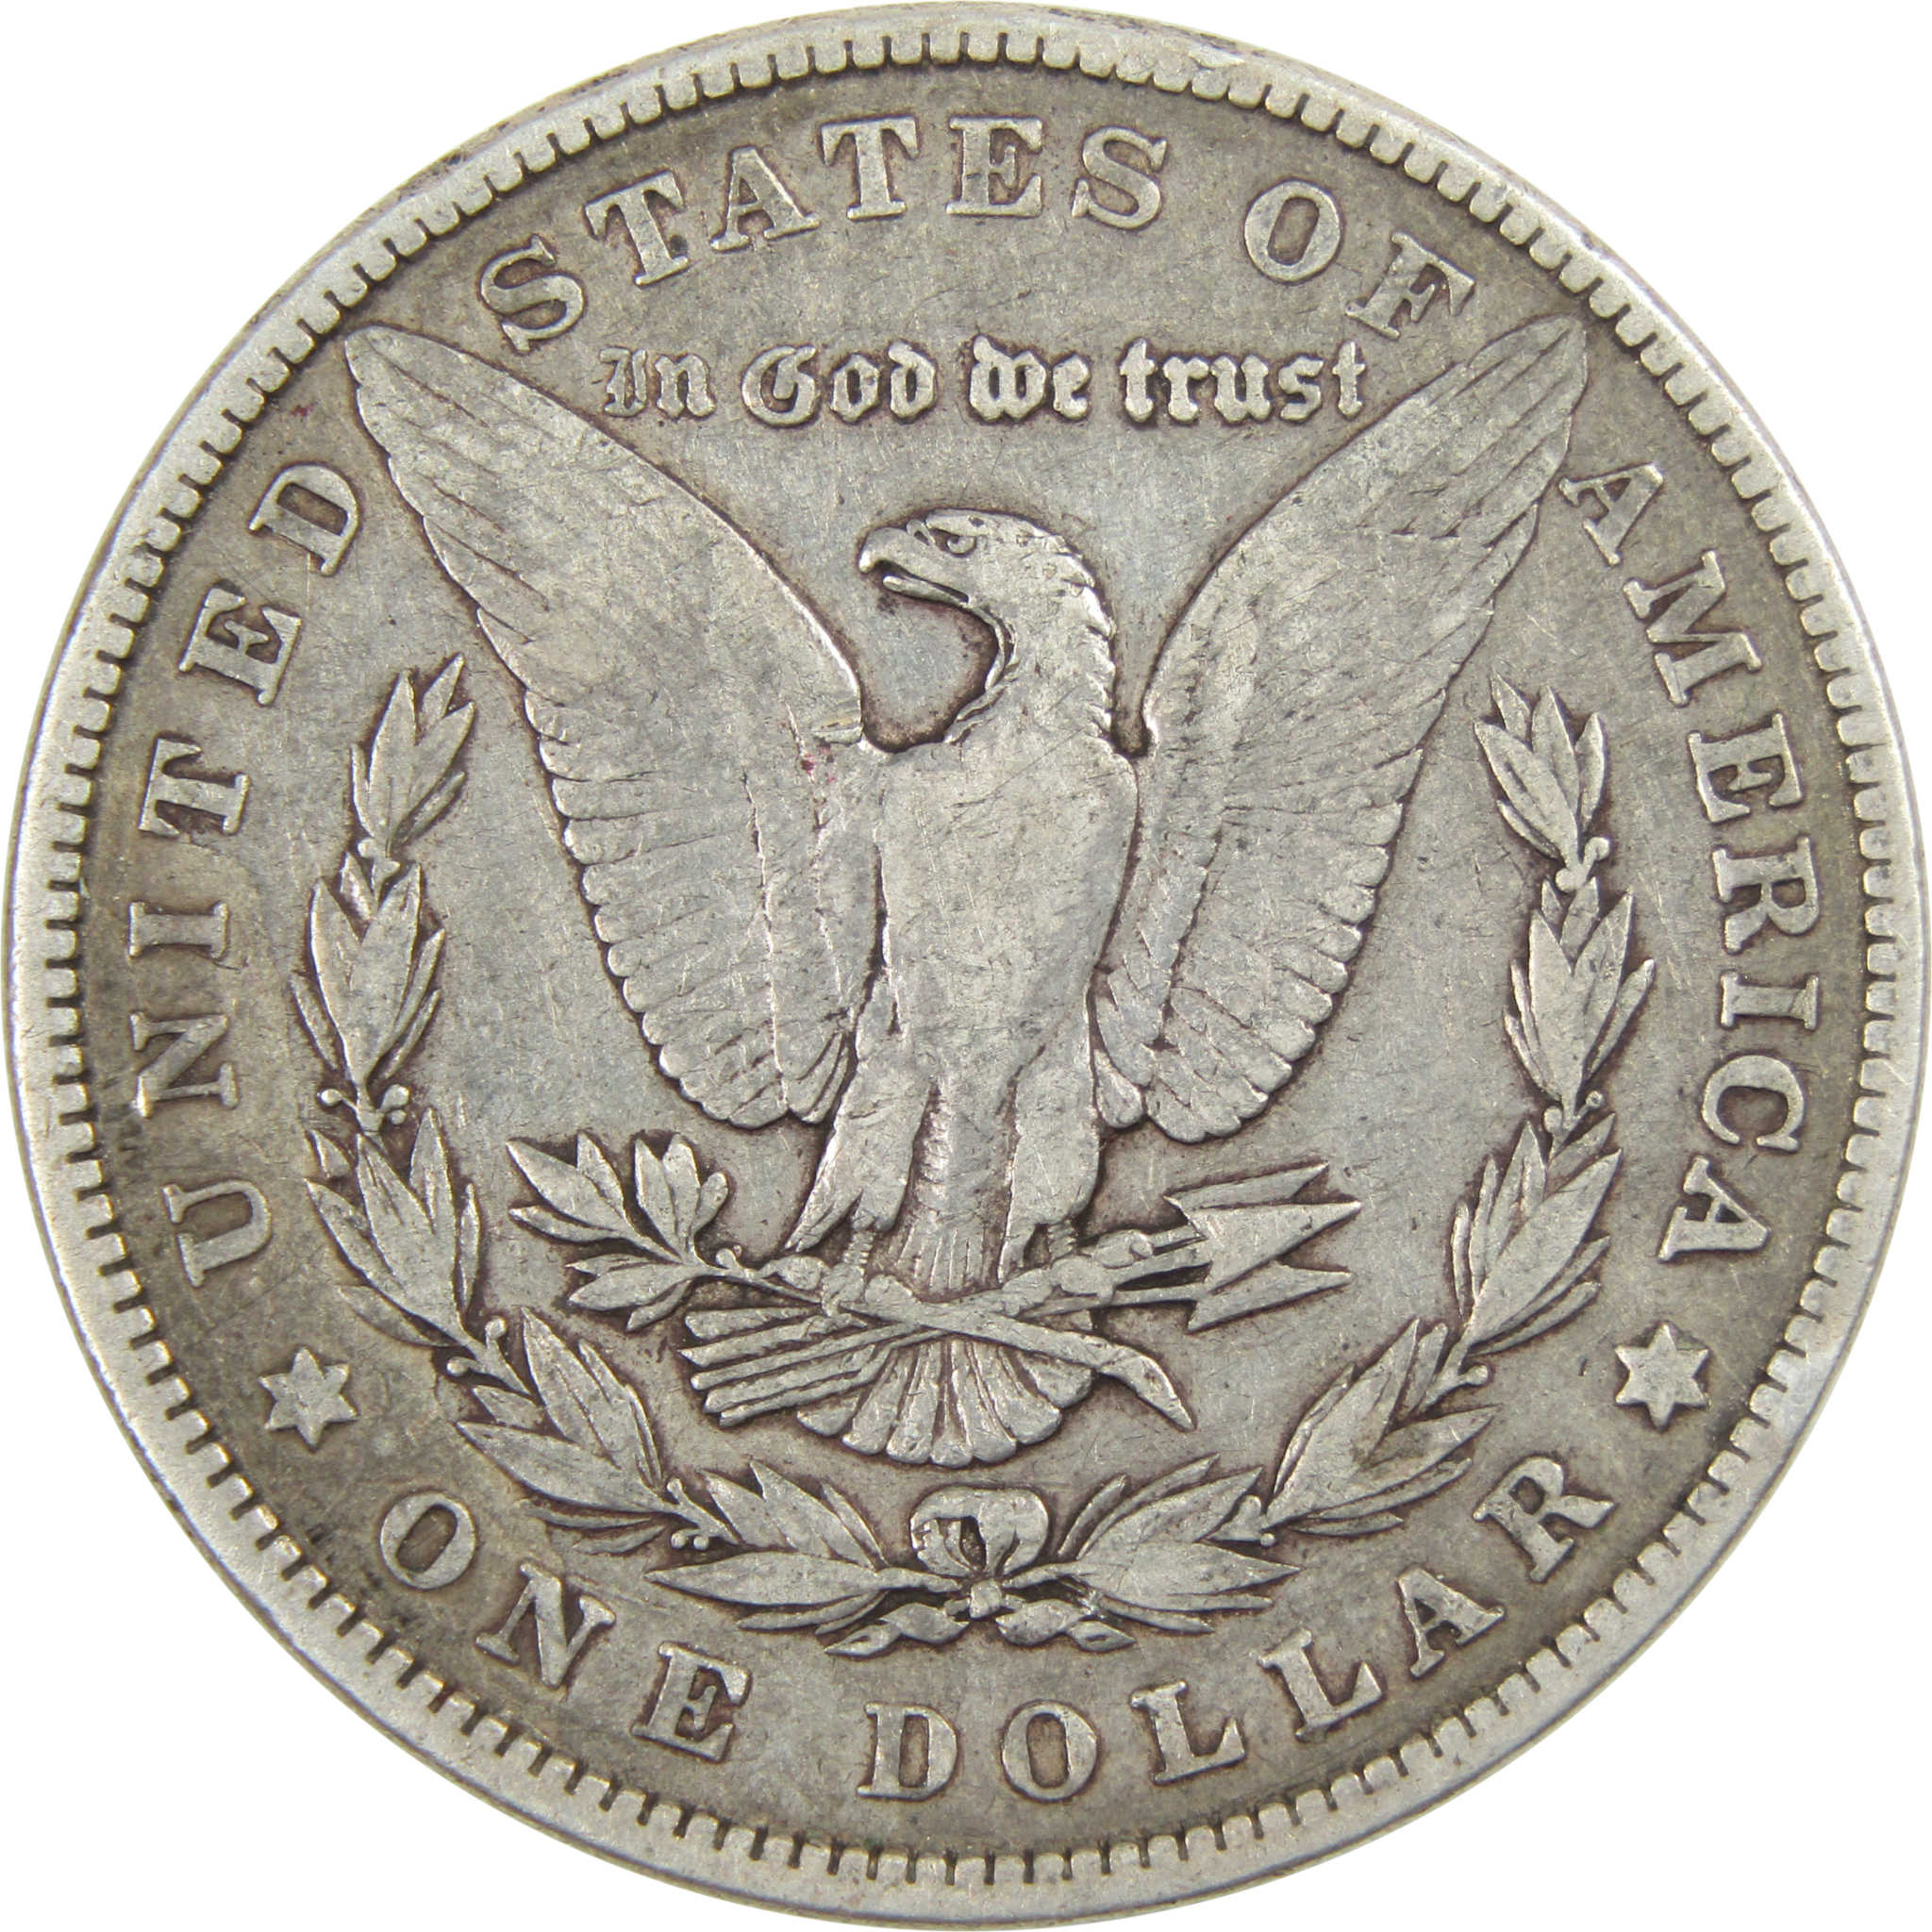 1902 Morgan Dollar F Fine 90% Silver $1 US Coin Collectible SKU:I3815 - Morgan coin - Morgan silver dollar - Morgan silver dollar for sale - Profile Coins &amp; Collectibles